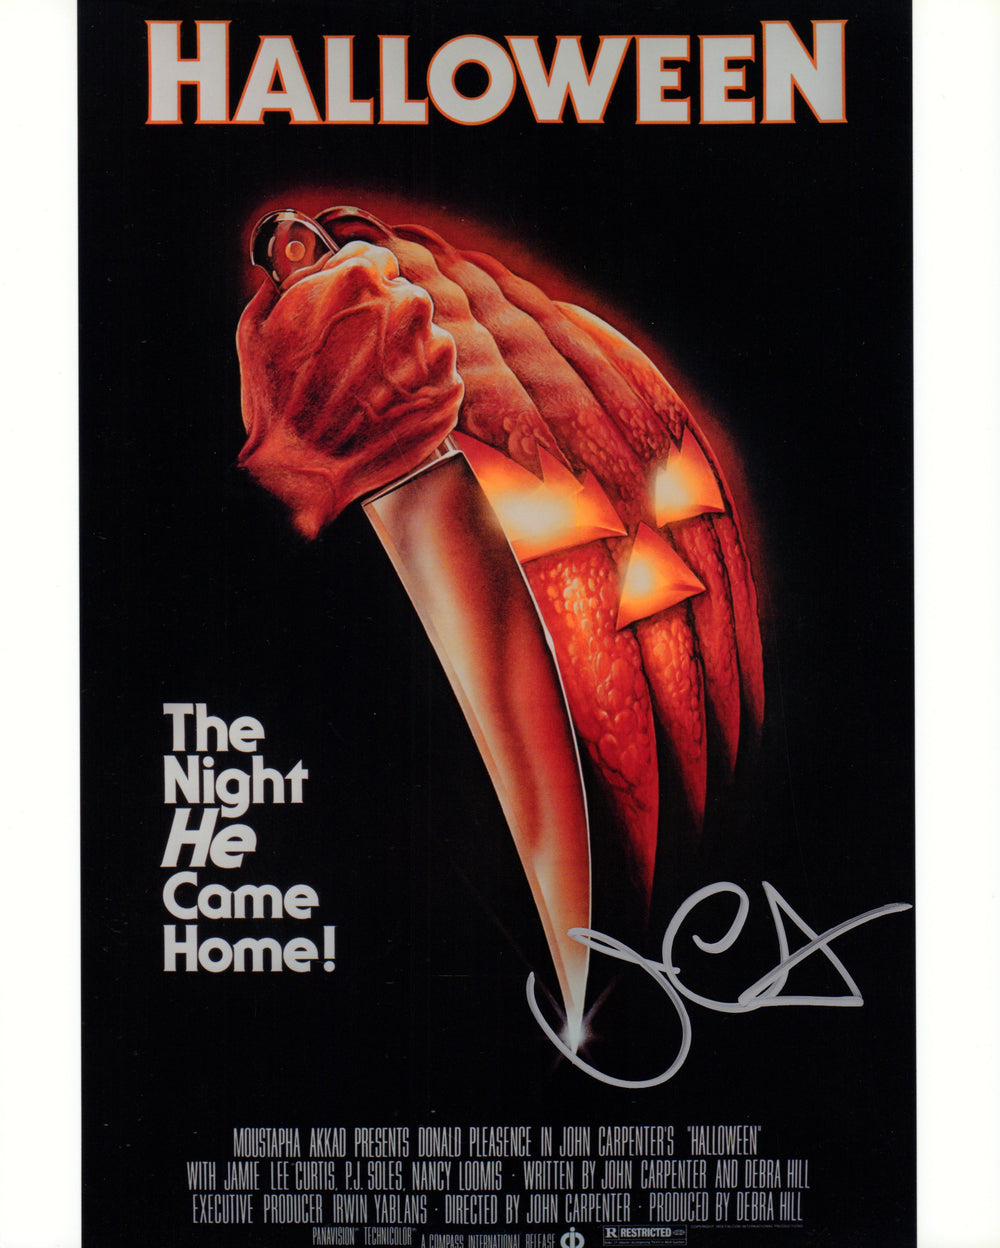 John Carpenter Director of Halloween Signed 8x10 Photo